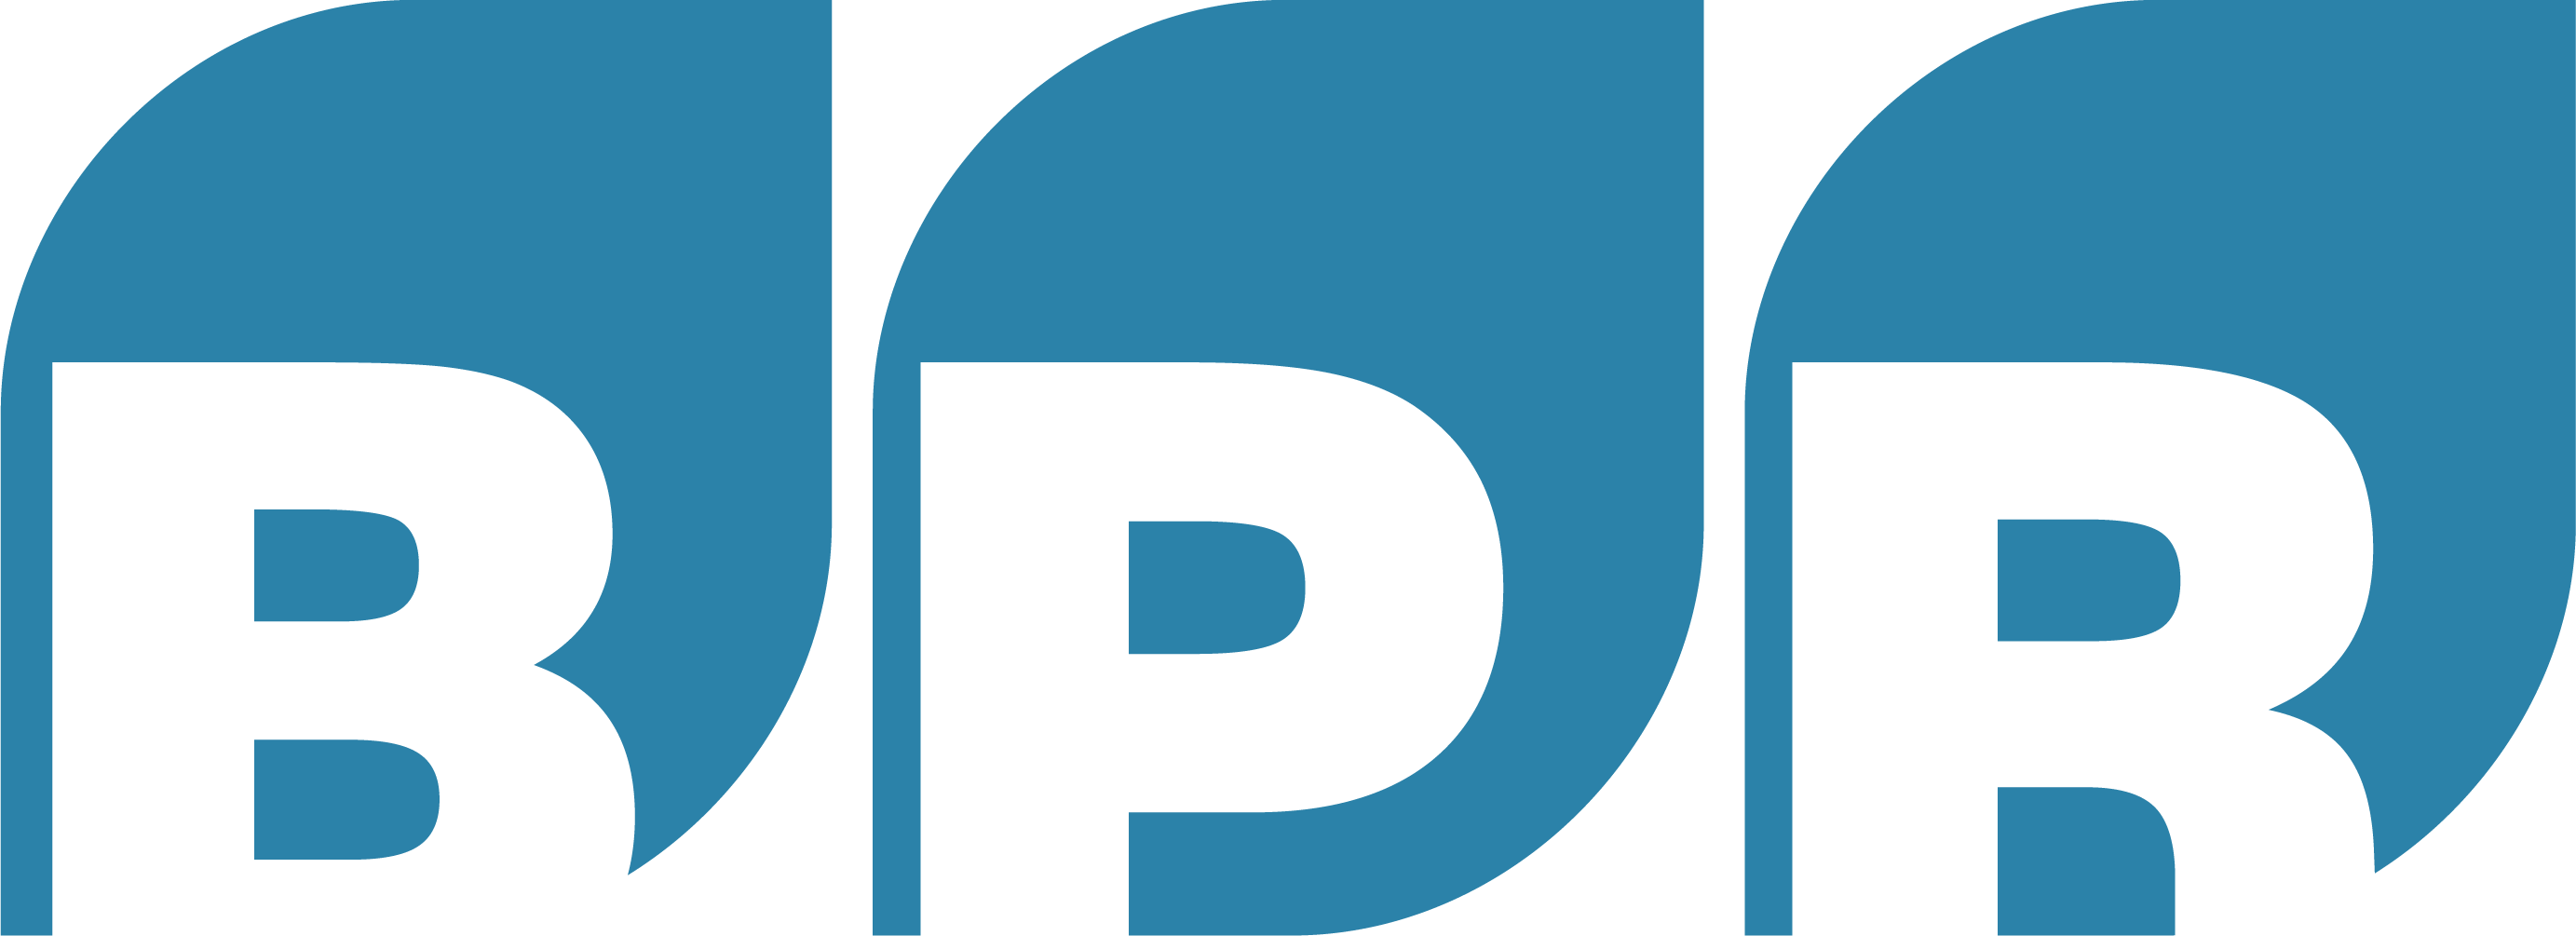 Logo BPR